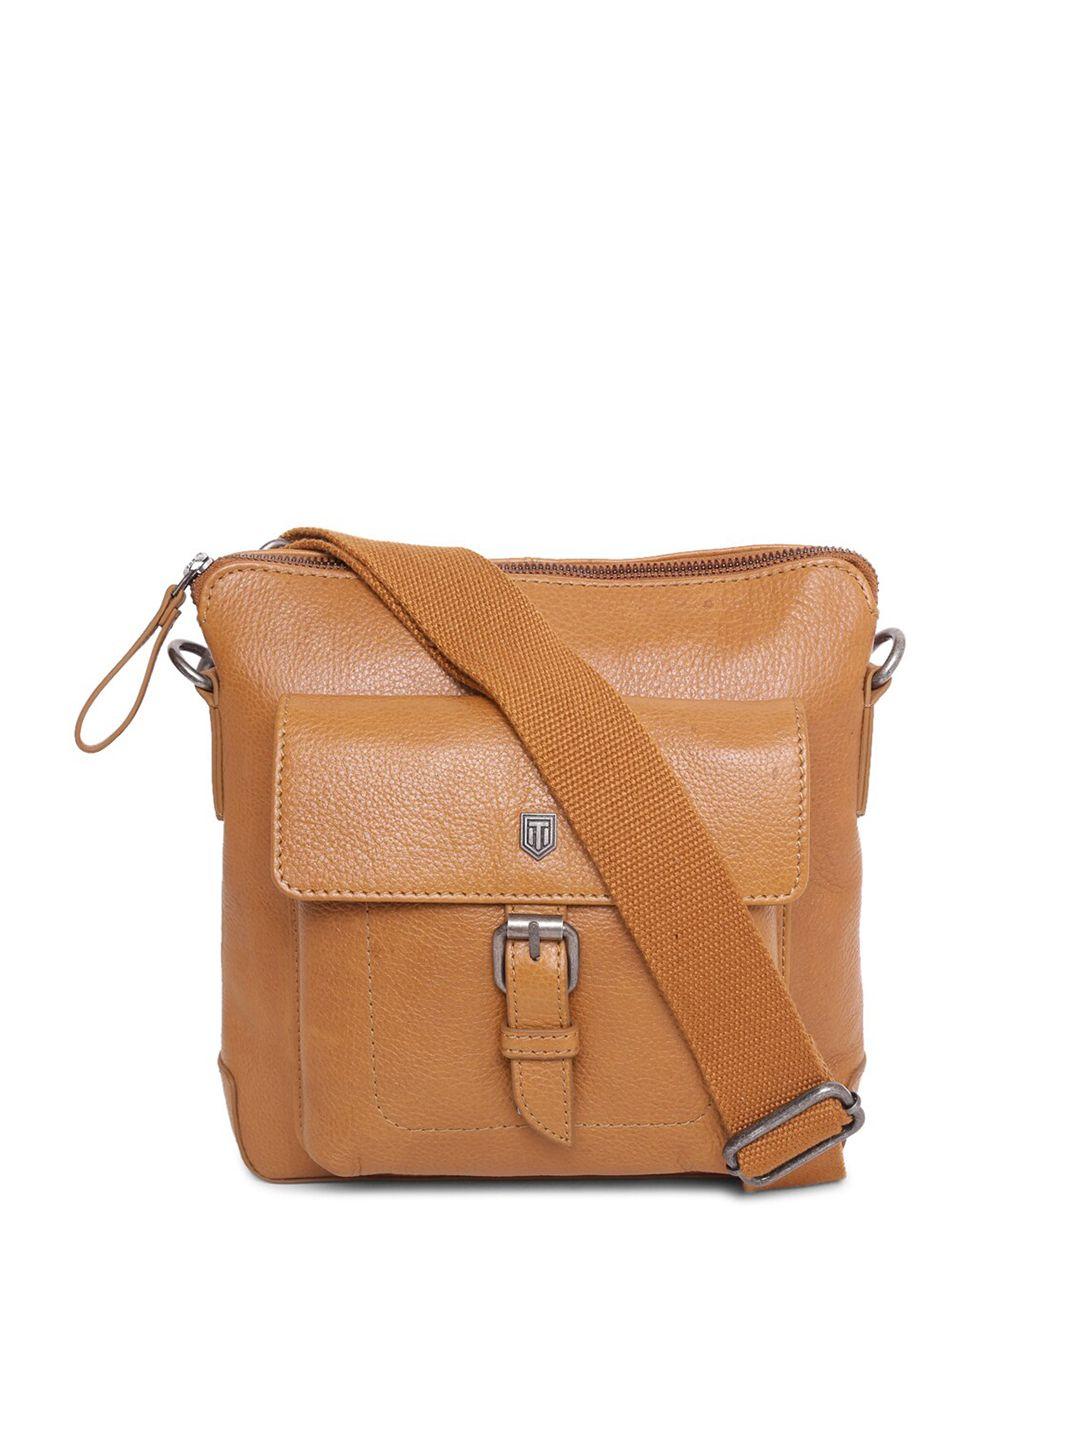 tom lang london unisex tan brown textured leather messenger bag